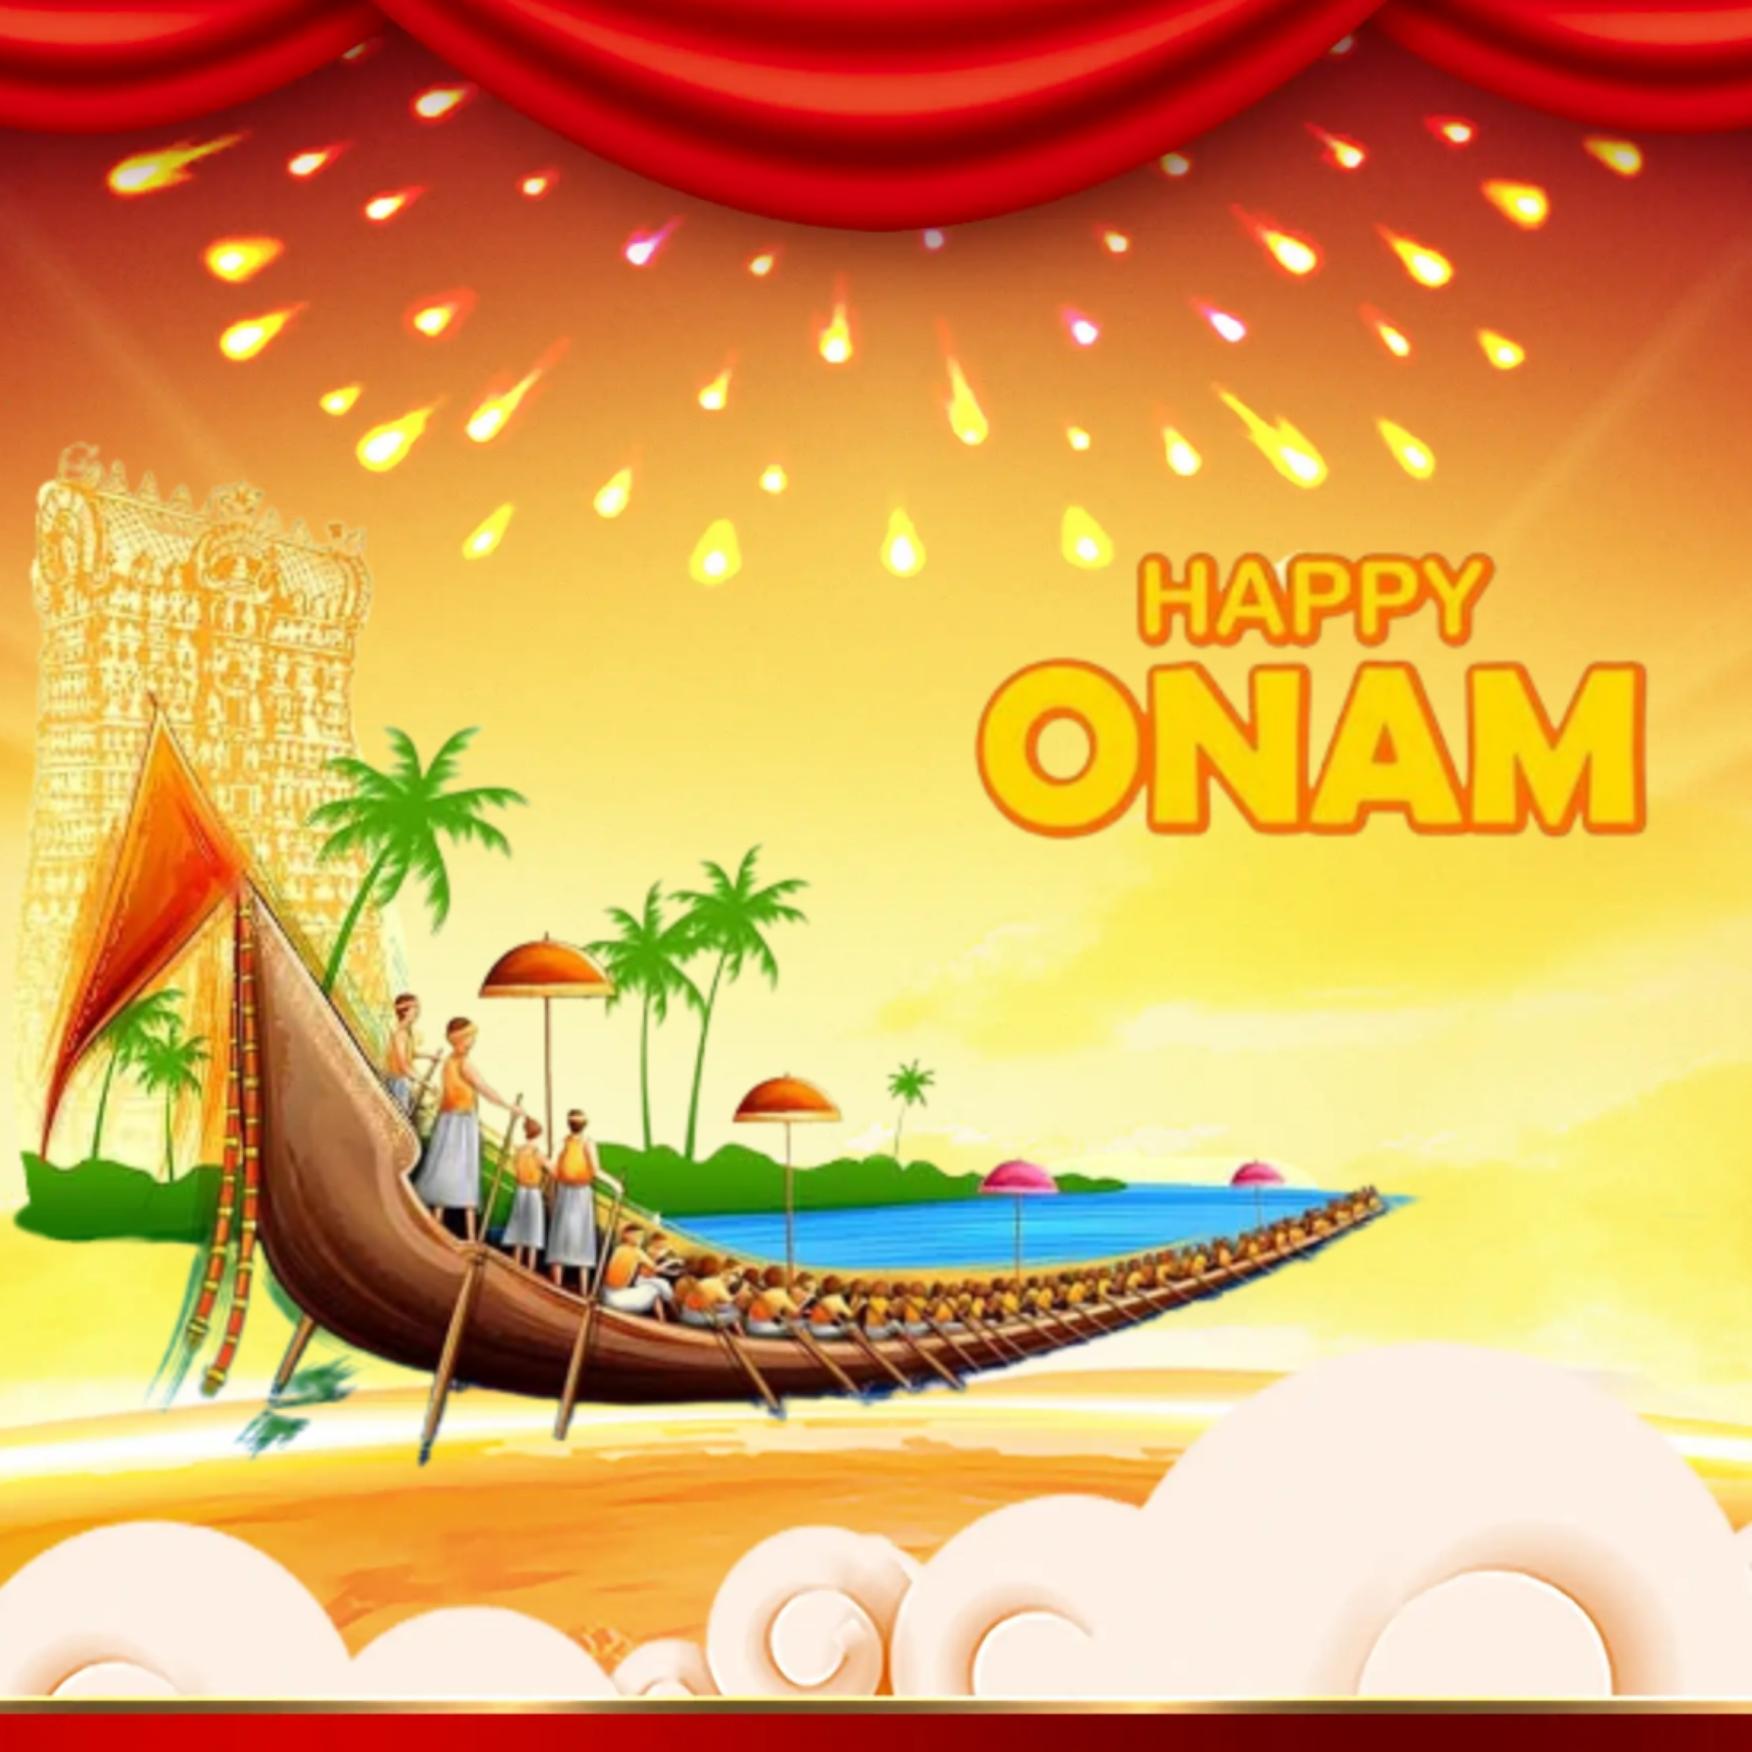 Happy Onam Wishes Images Hd (ID=2443) | AppleGreetings.com